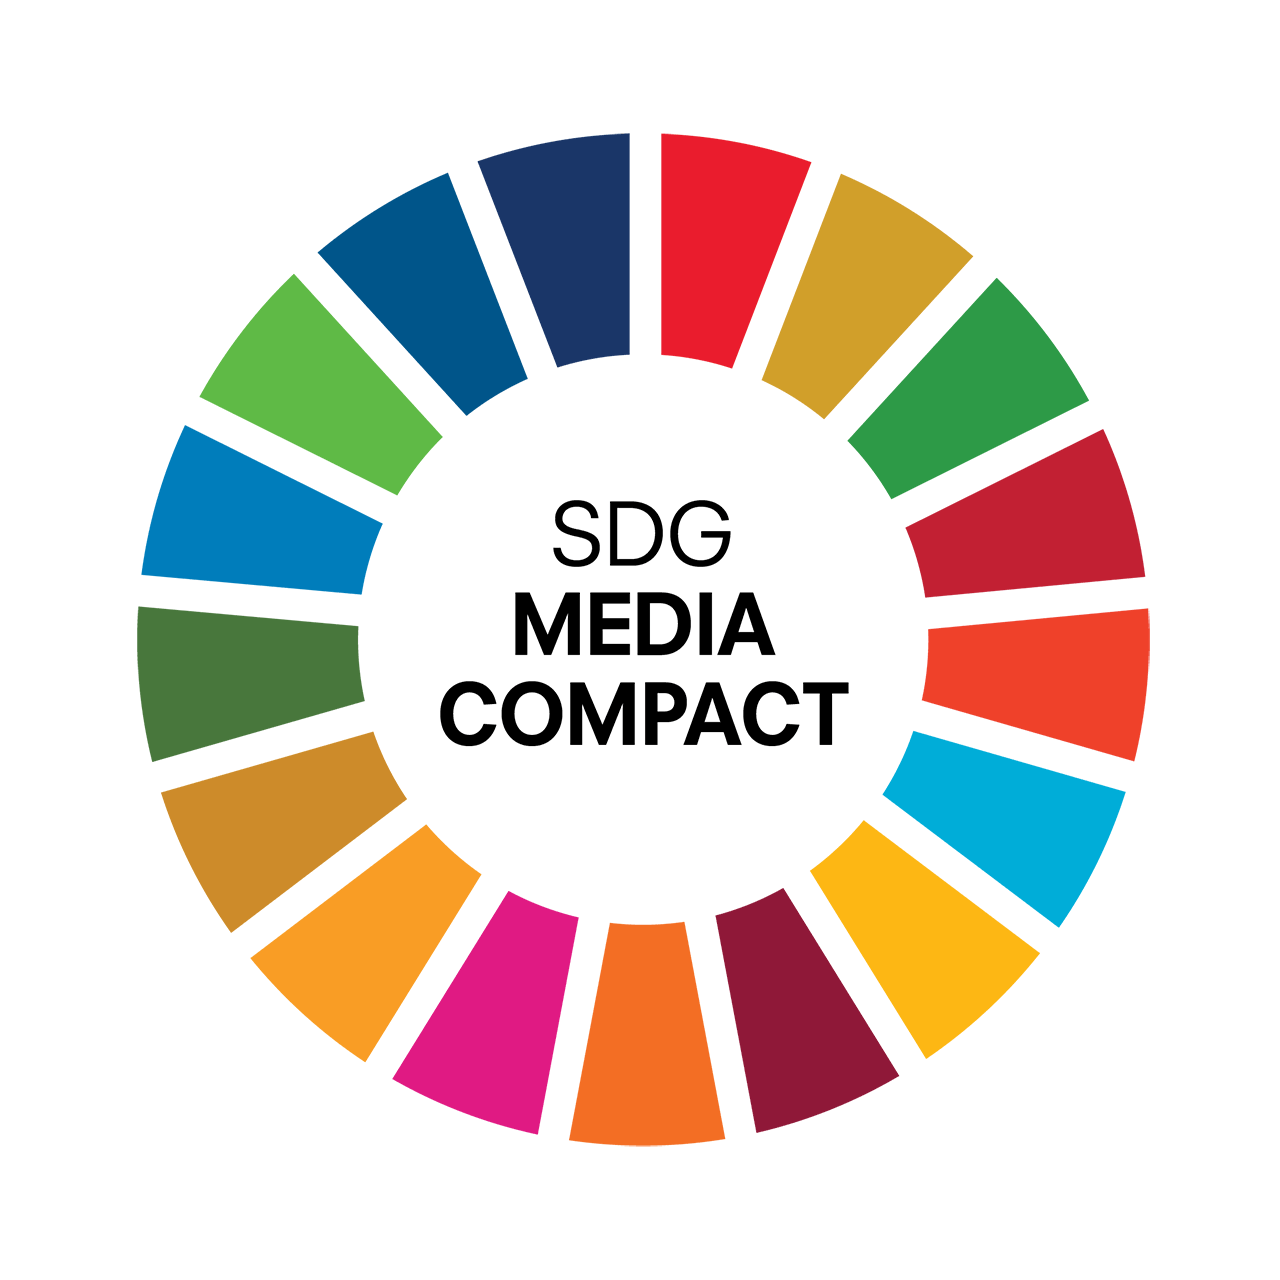 SDG メディア・コンパクト